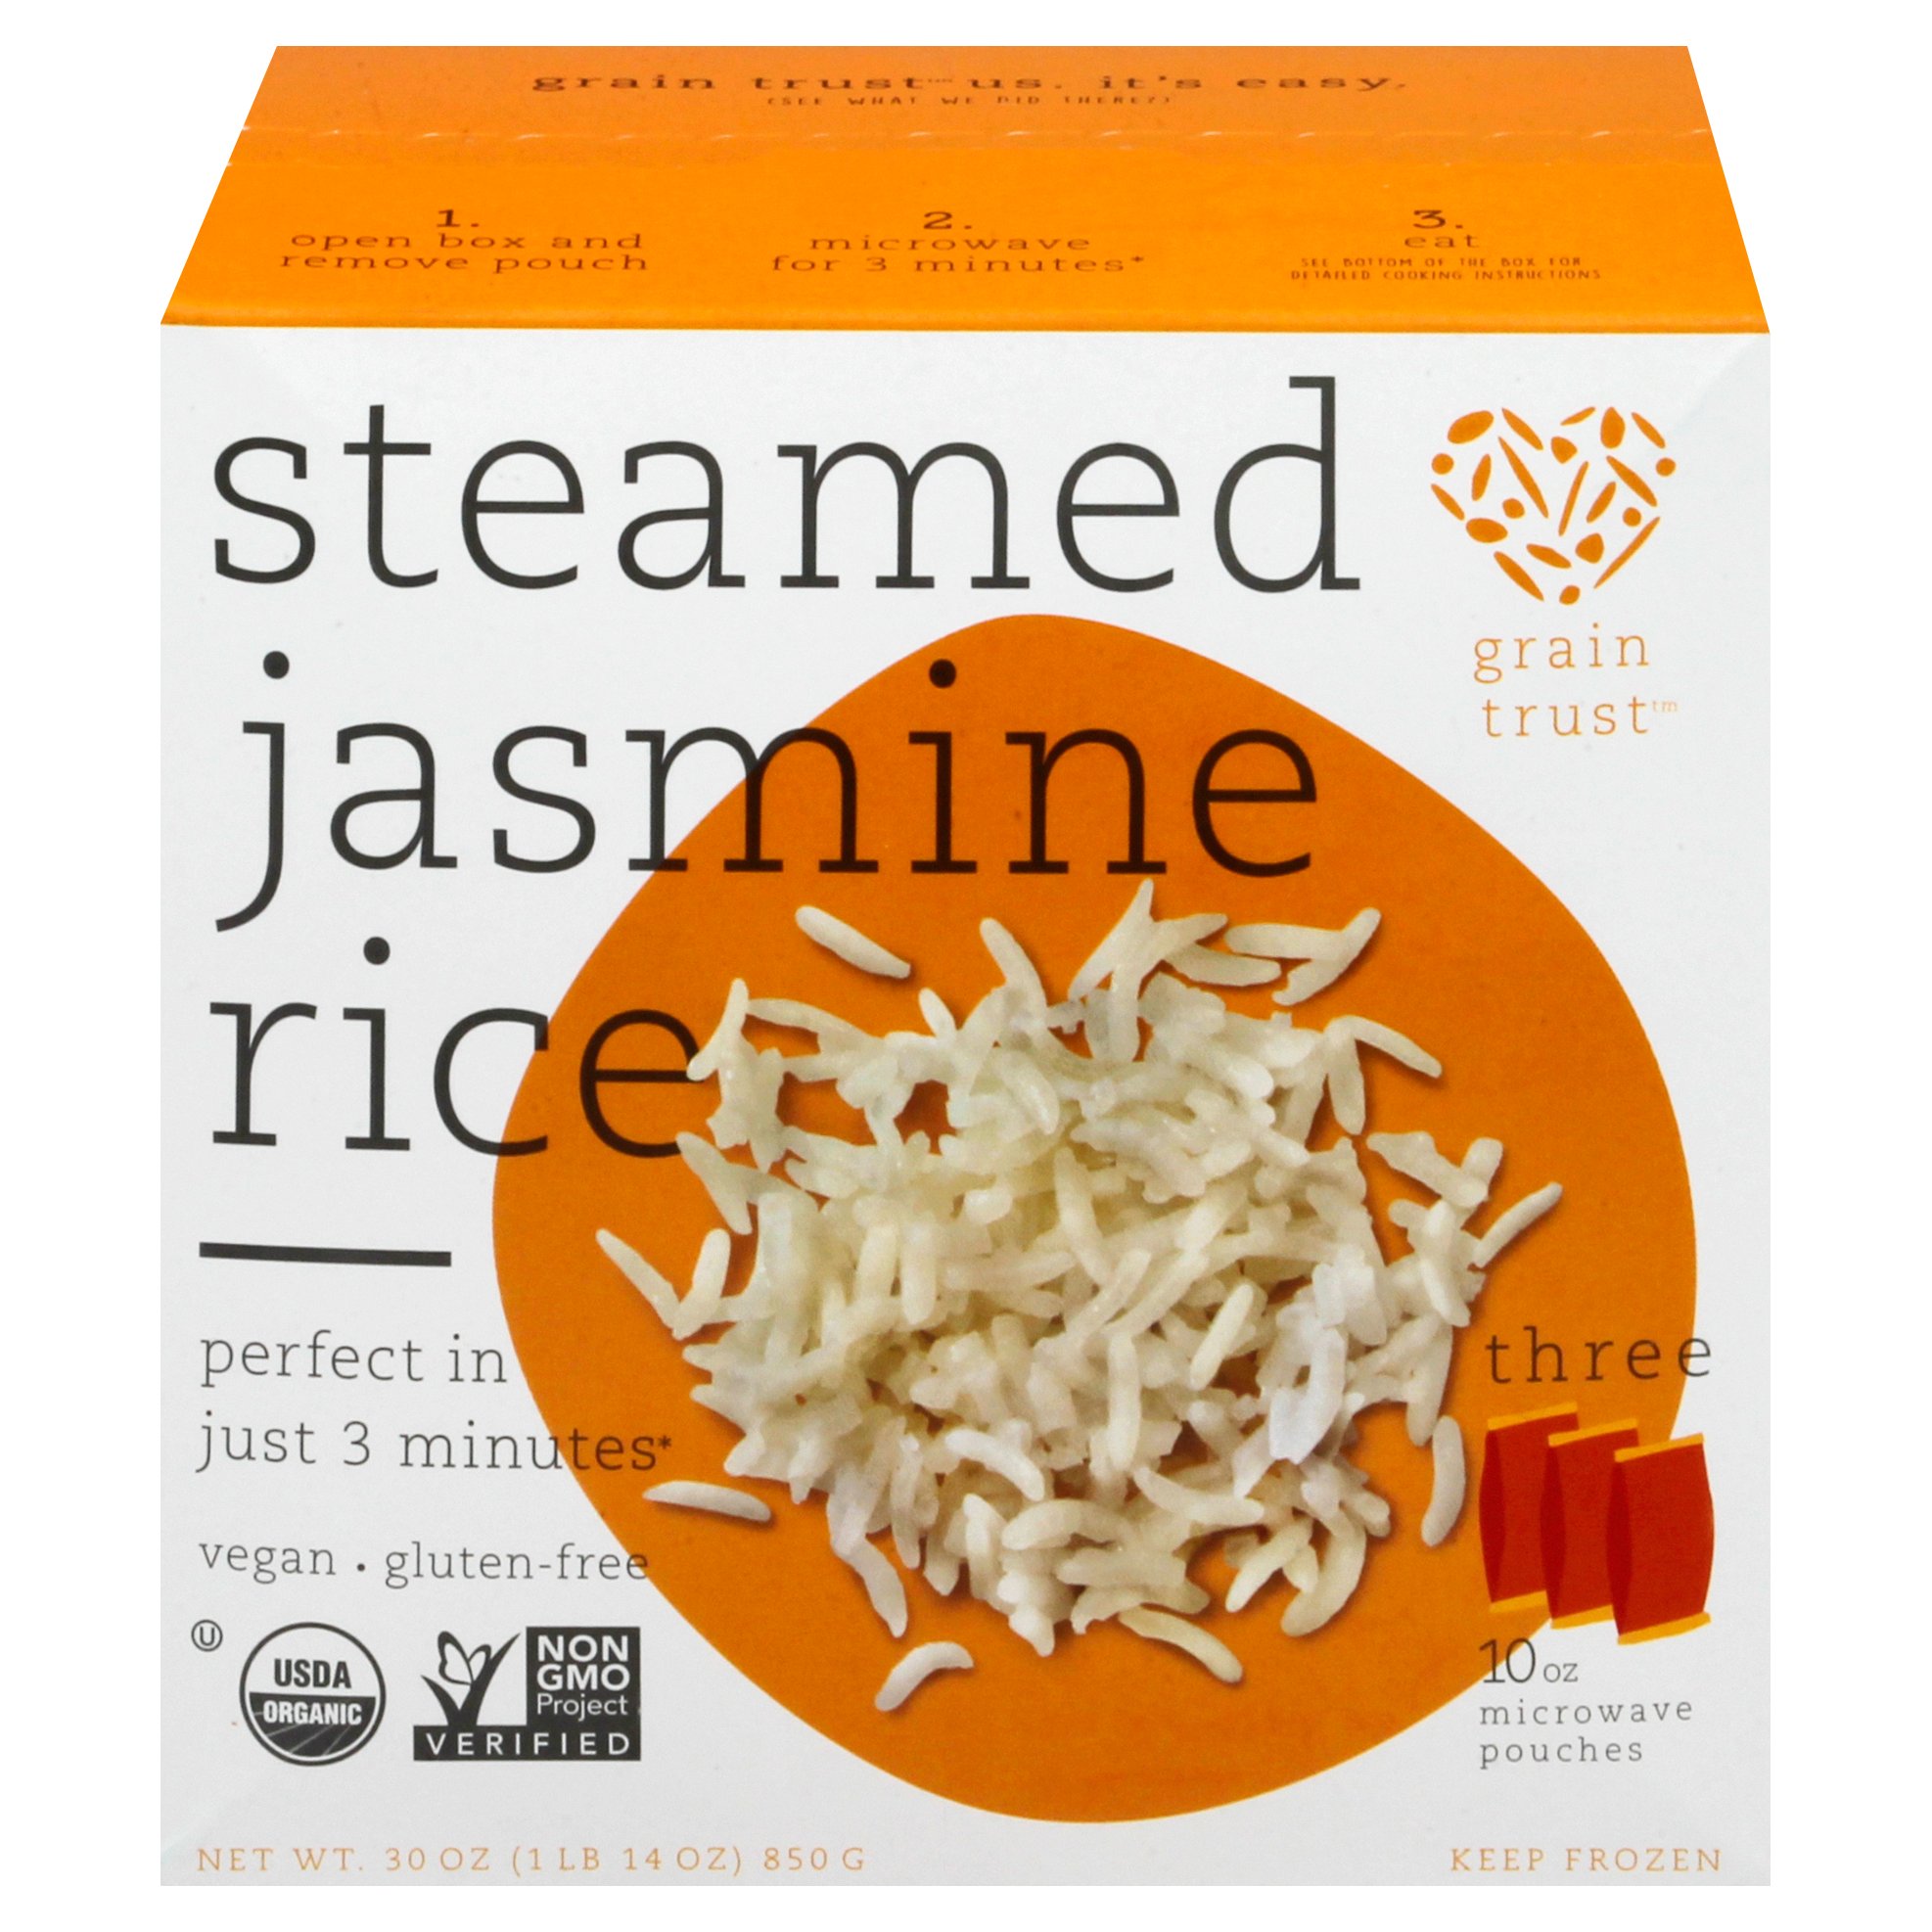 Ben's Original Ready Rice Jasmine Rice - Shop Rice & Grains at H-E-B